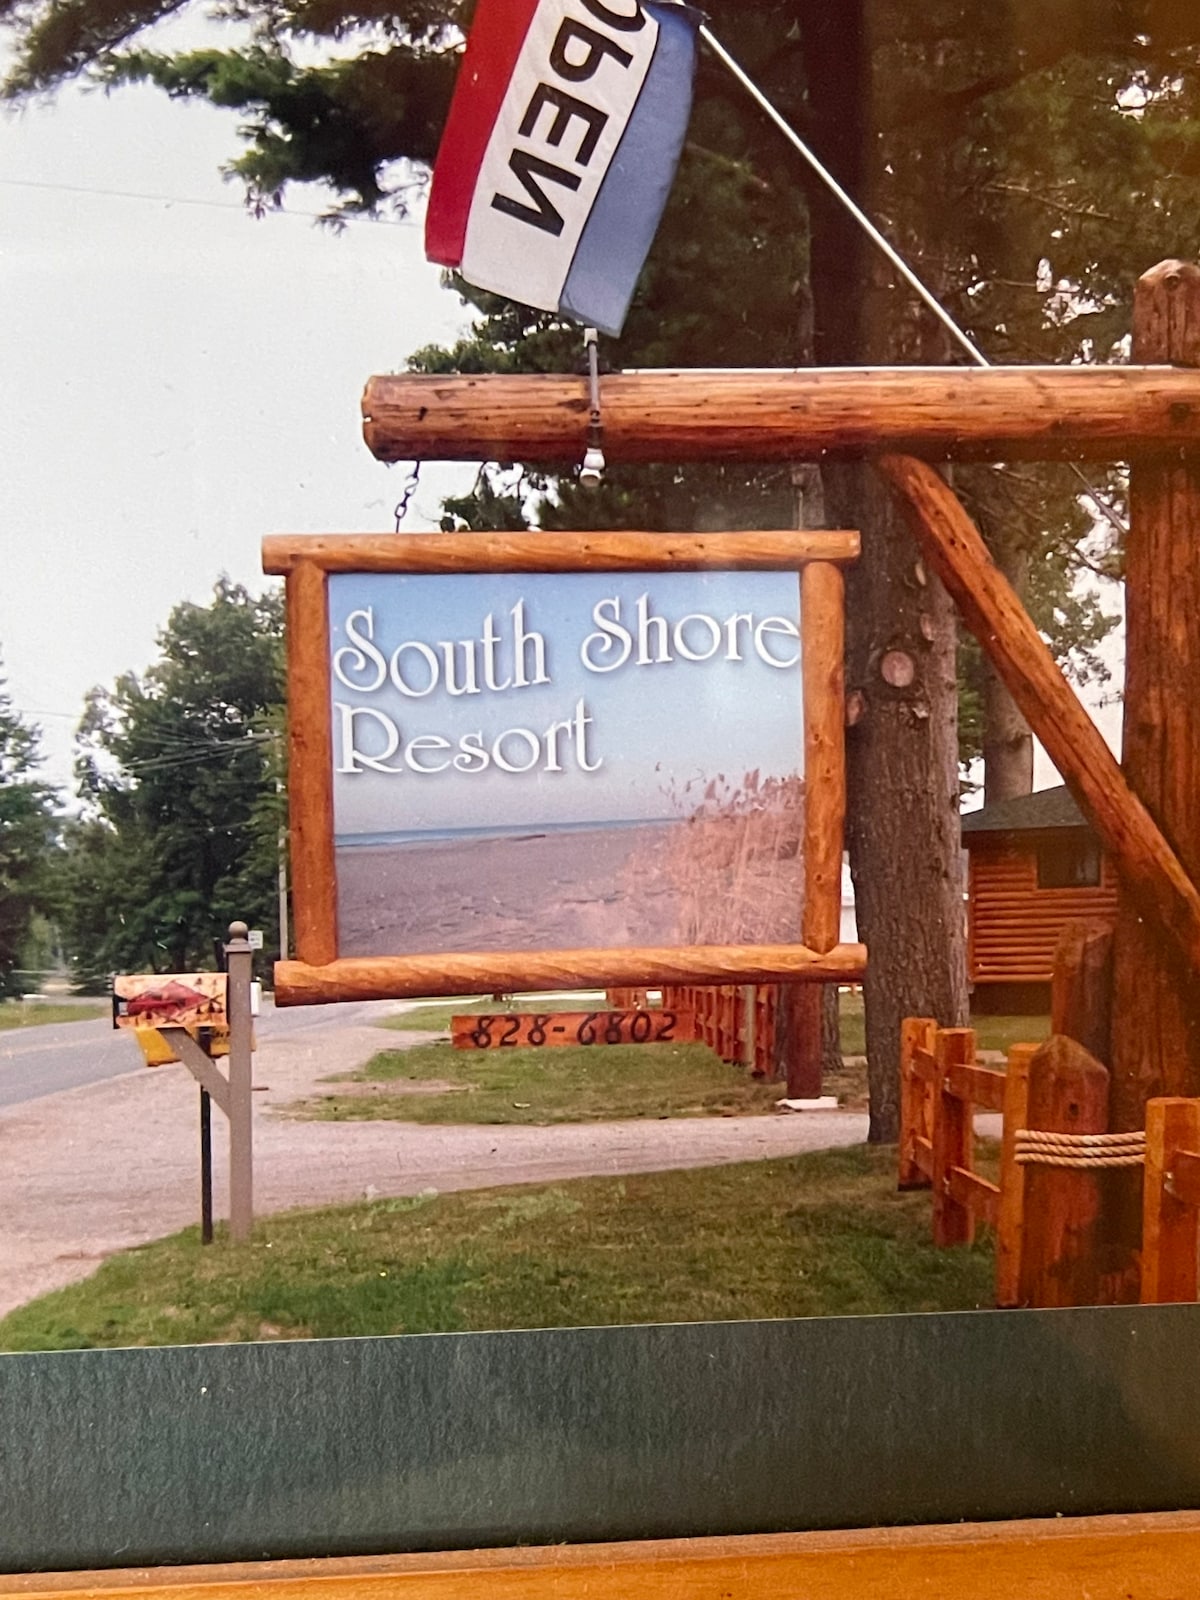 South Shore Resort - The Eagle